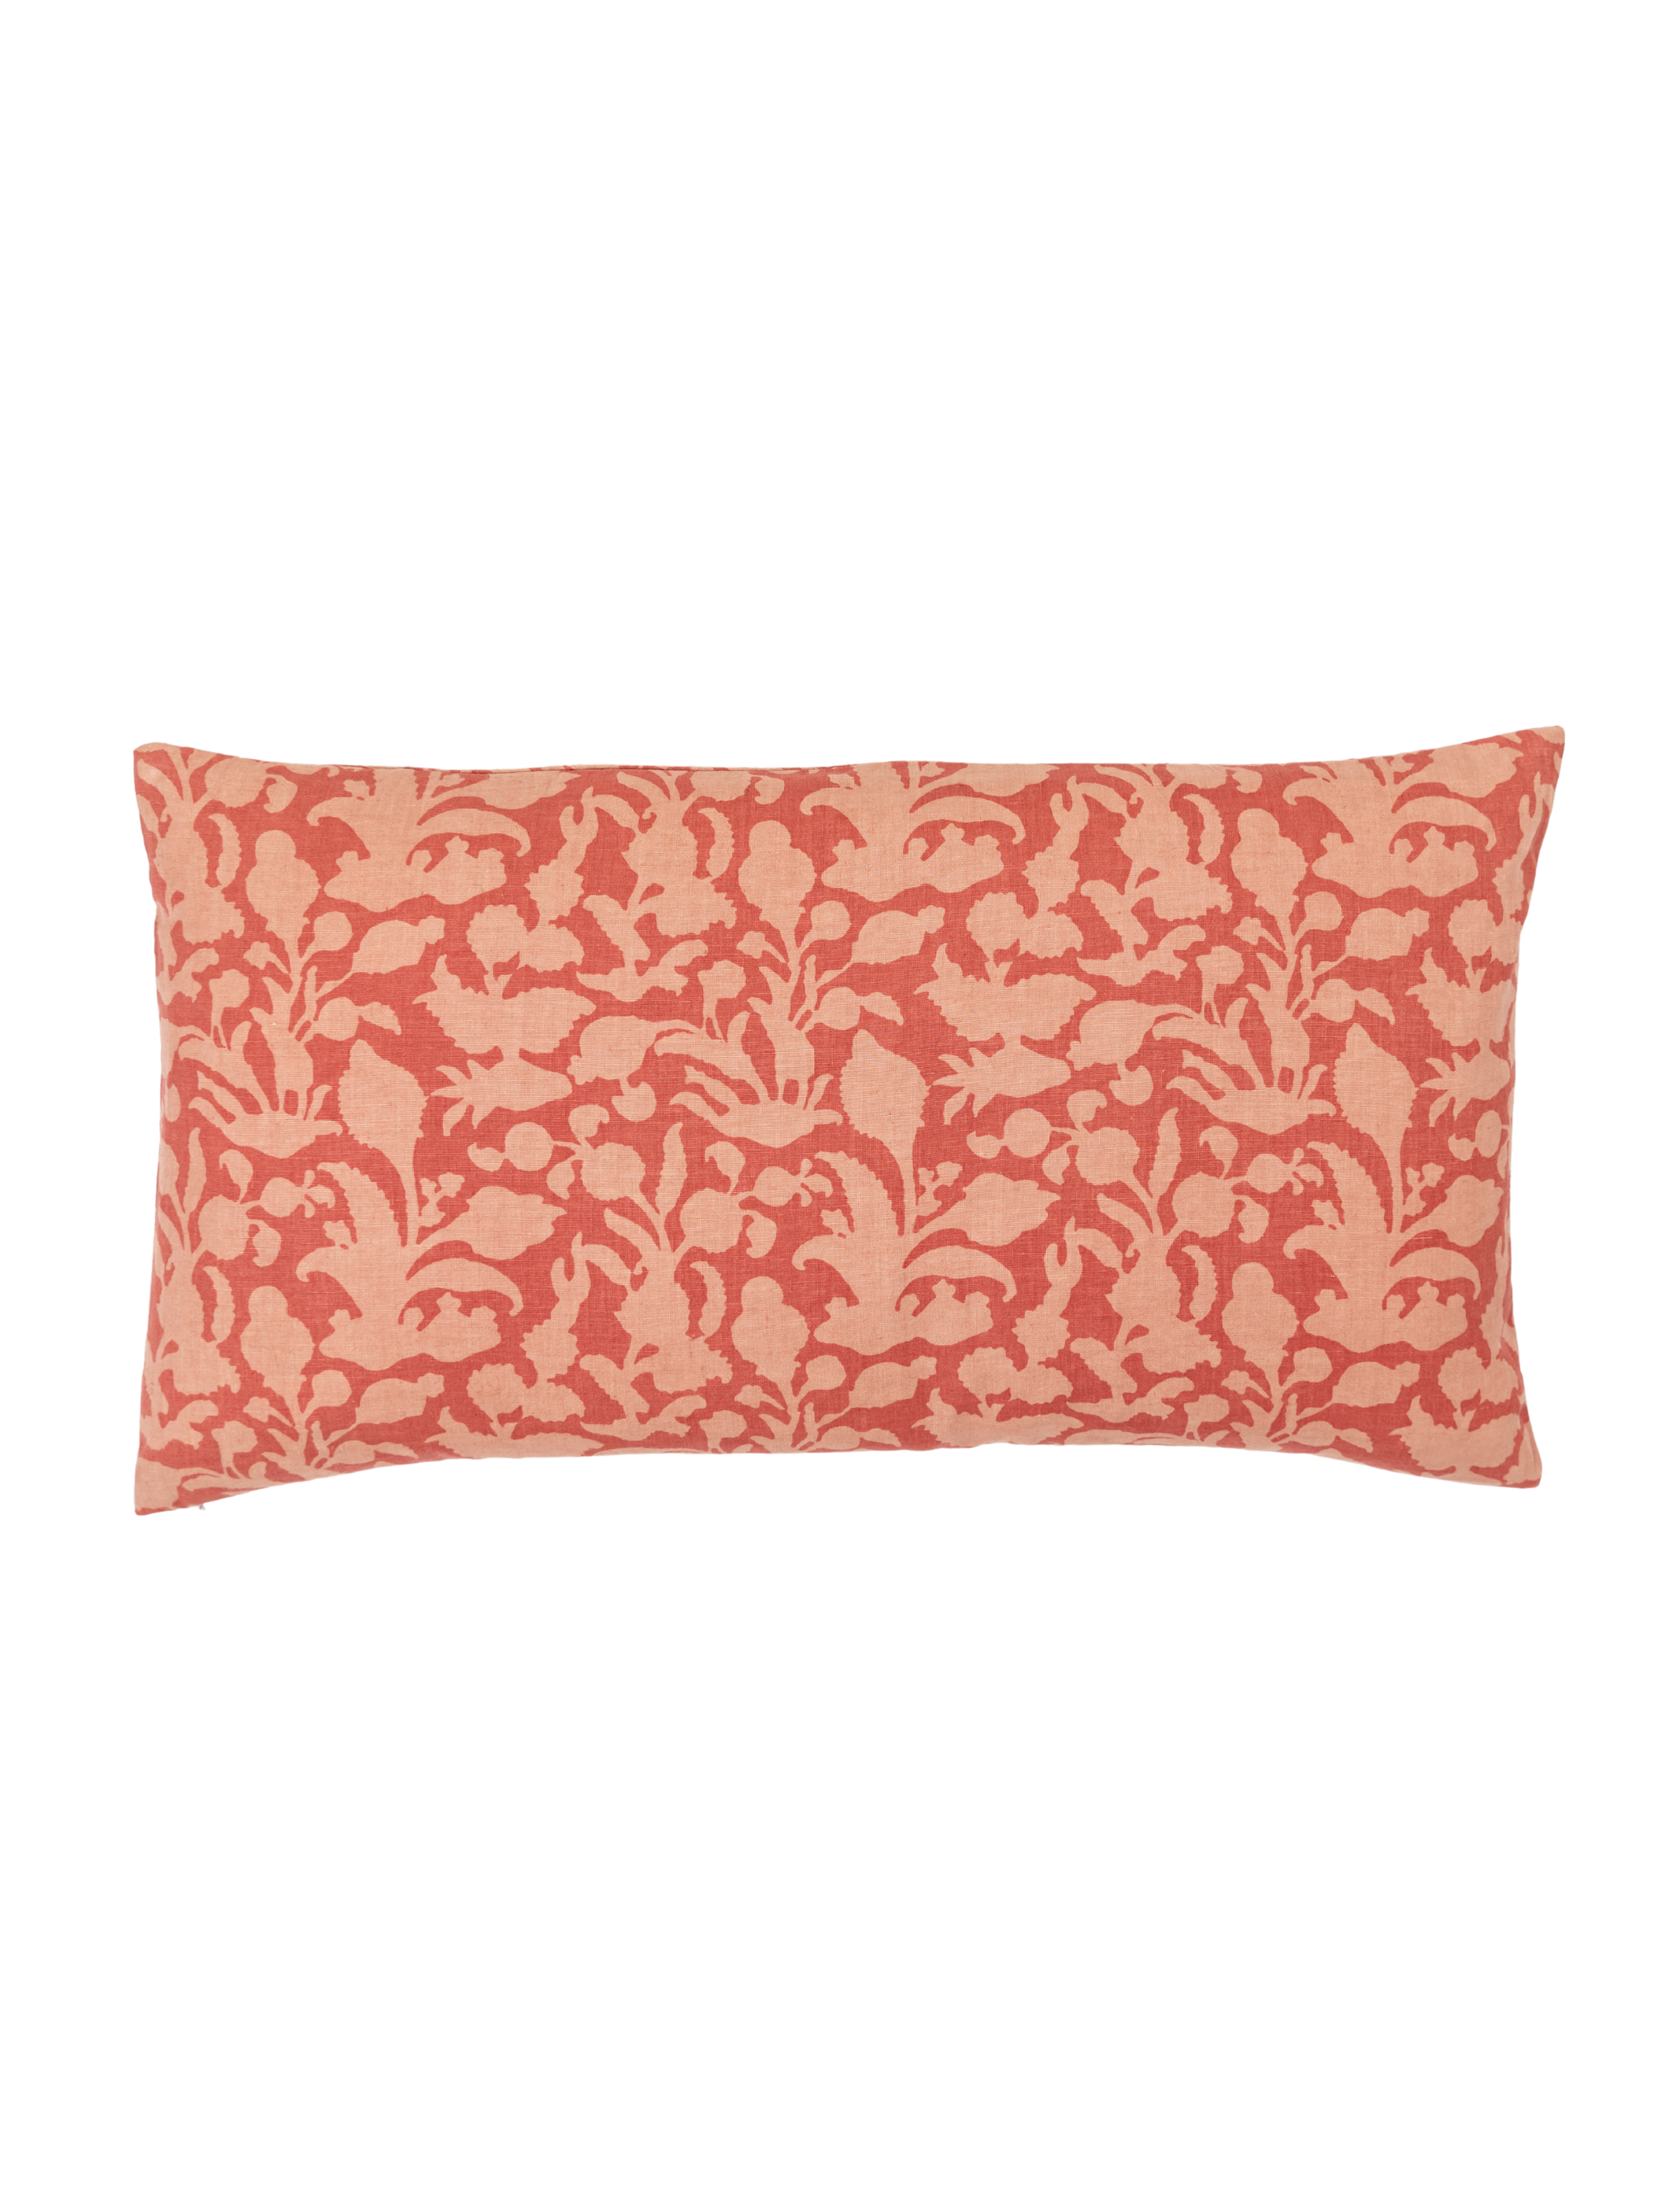 Foxglove Lumbar Pillow Cover